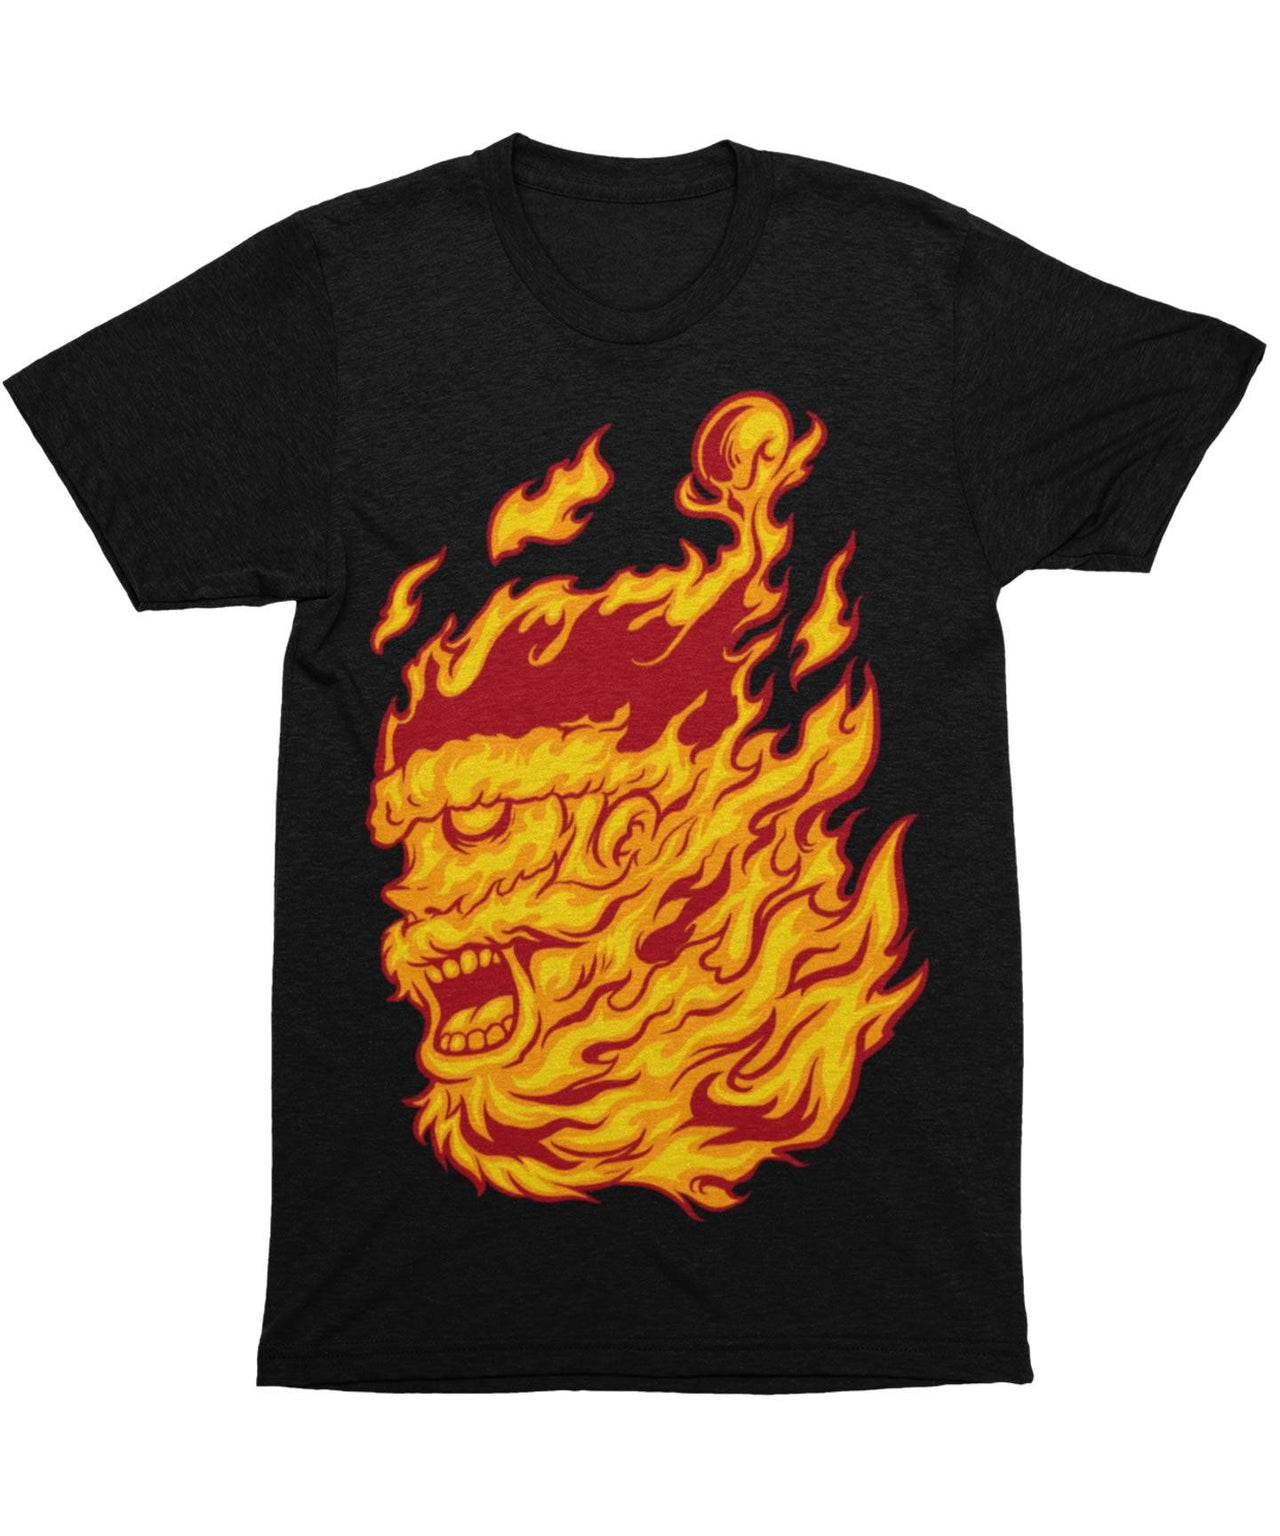 Flame Of Santa Unisex Christmas Mens T-Shirt 8Ball